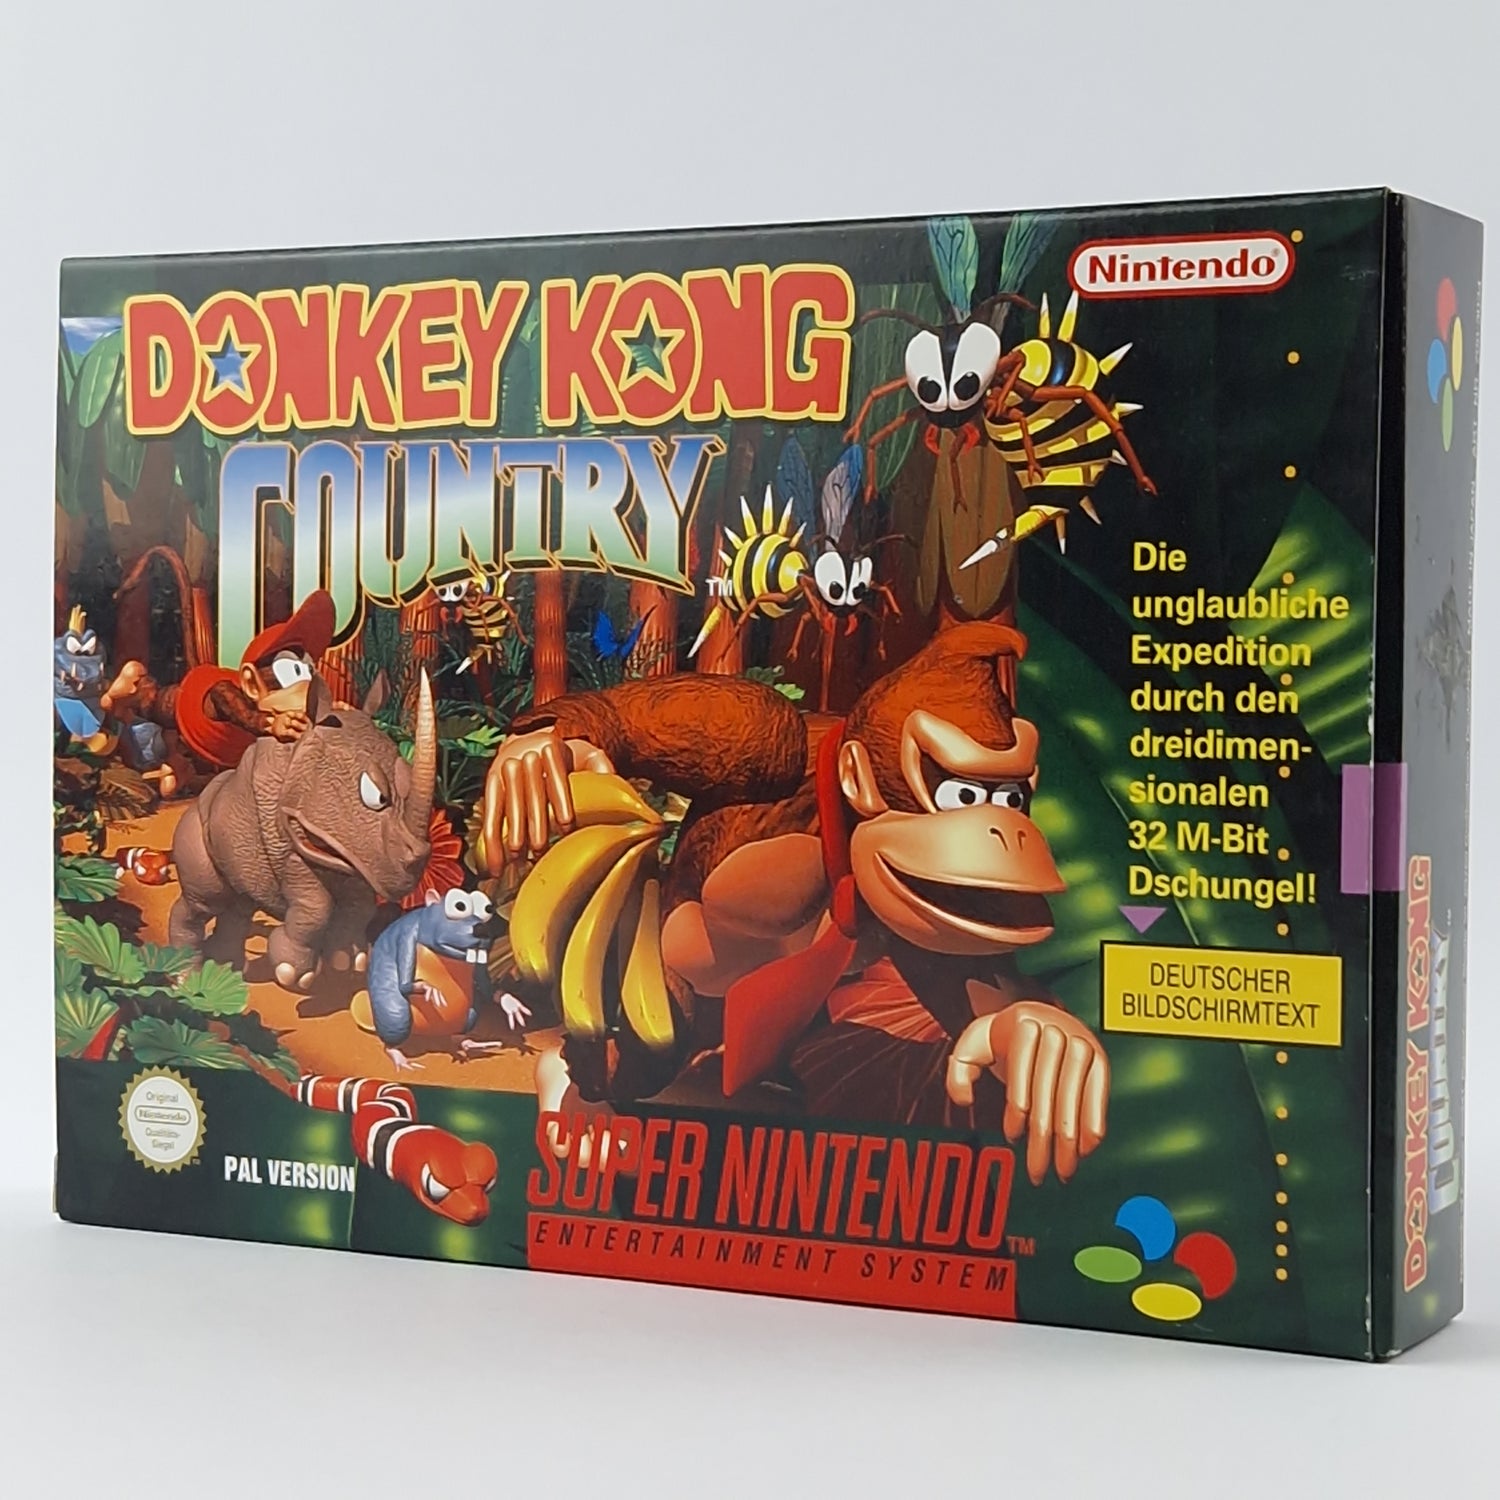 Super Nintendo Game: Donkey Kong Country 1 - Module Instructions OVP cib / SNES